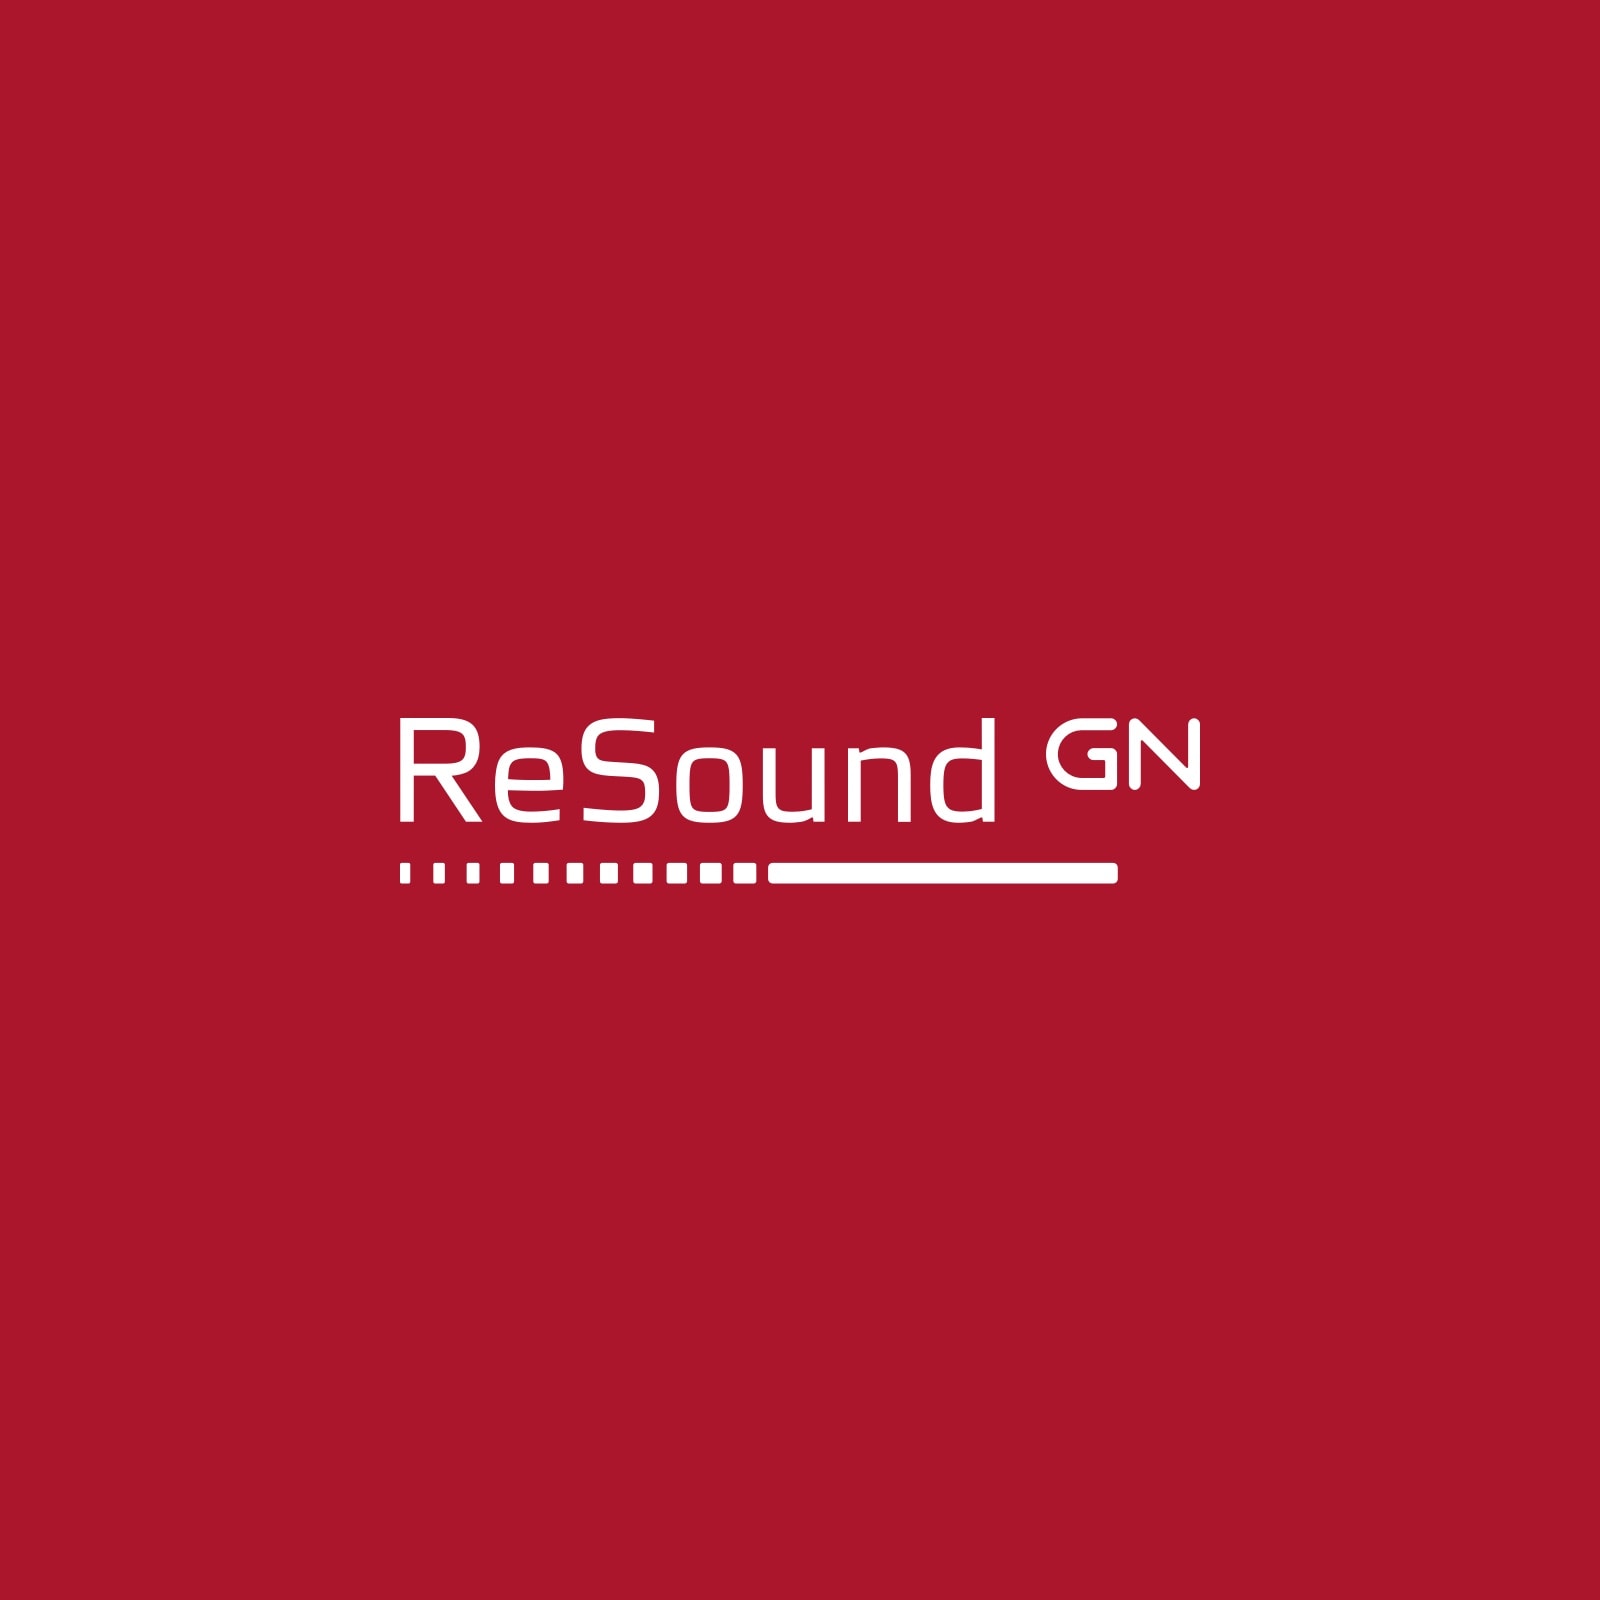 GN-Resound app udvikling - Wacky Studio